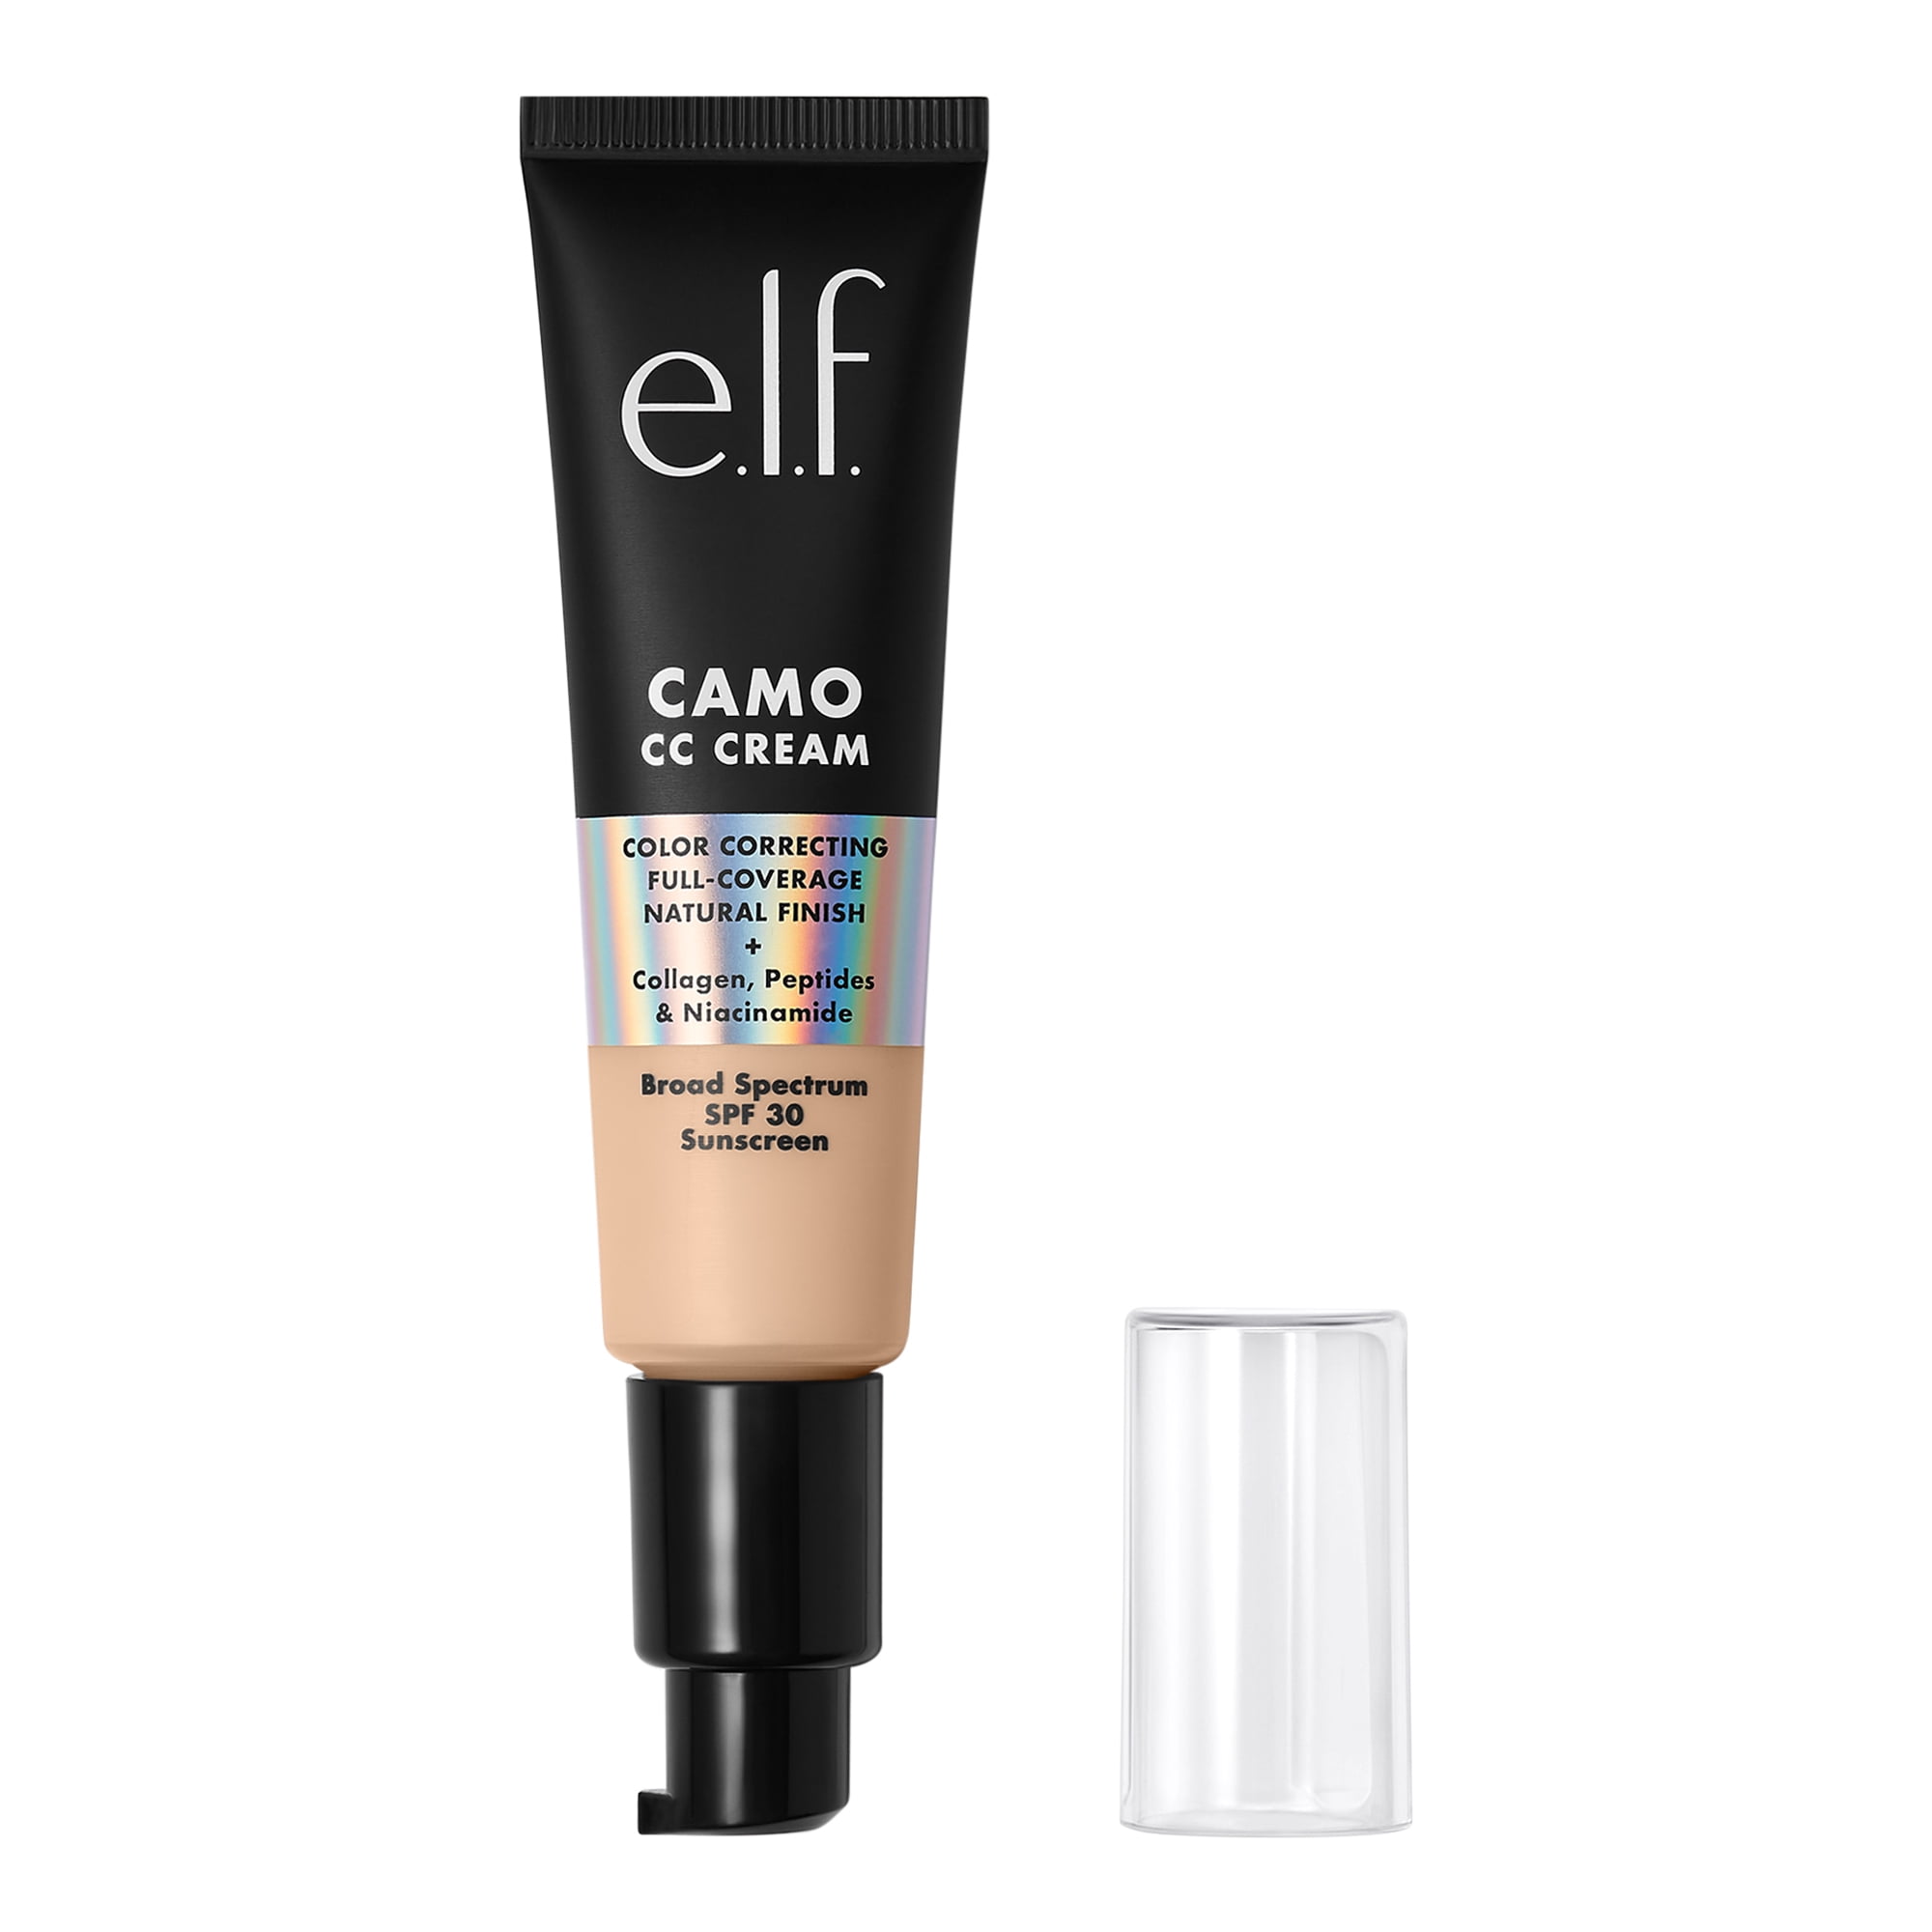 e.l.f. Camo CC Cream, Light 280 N, 1.05 oz